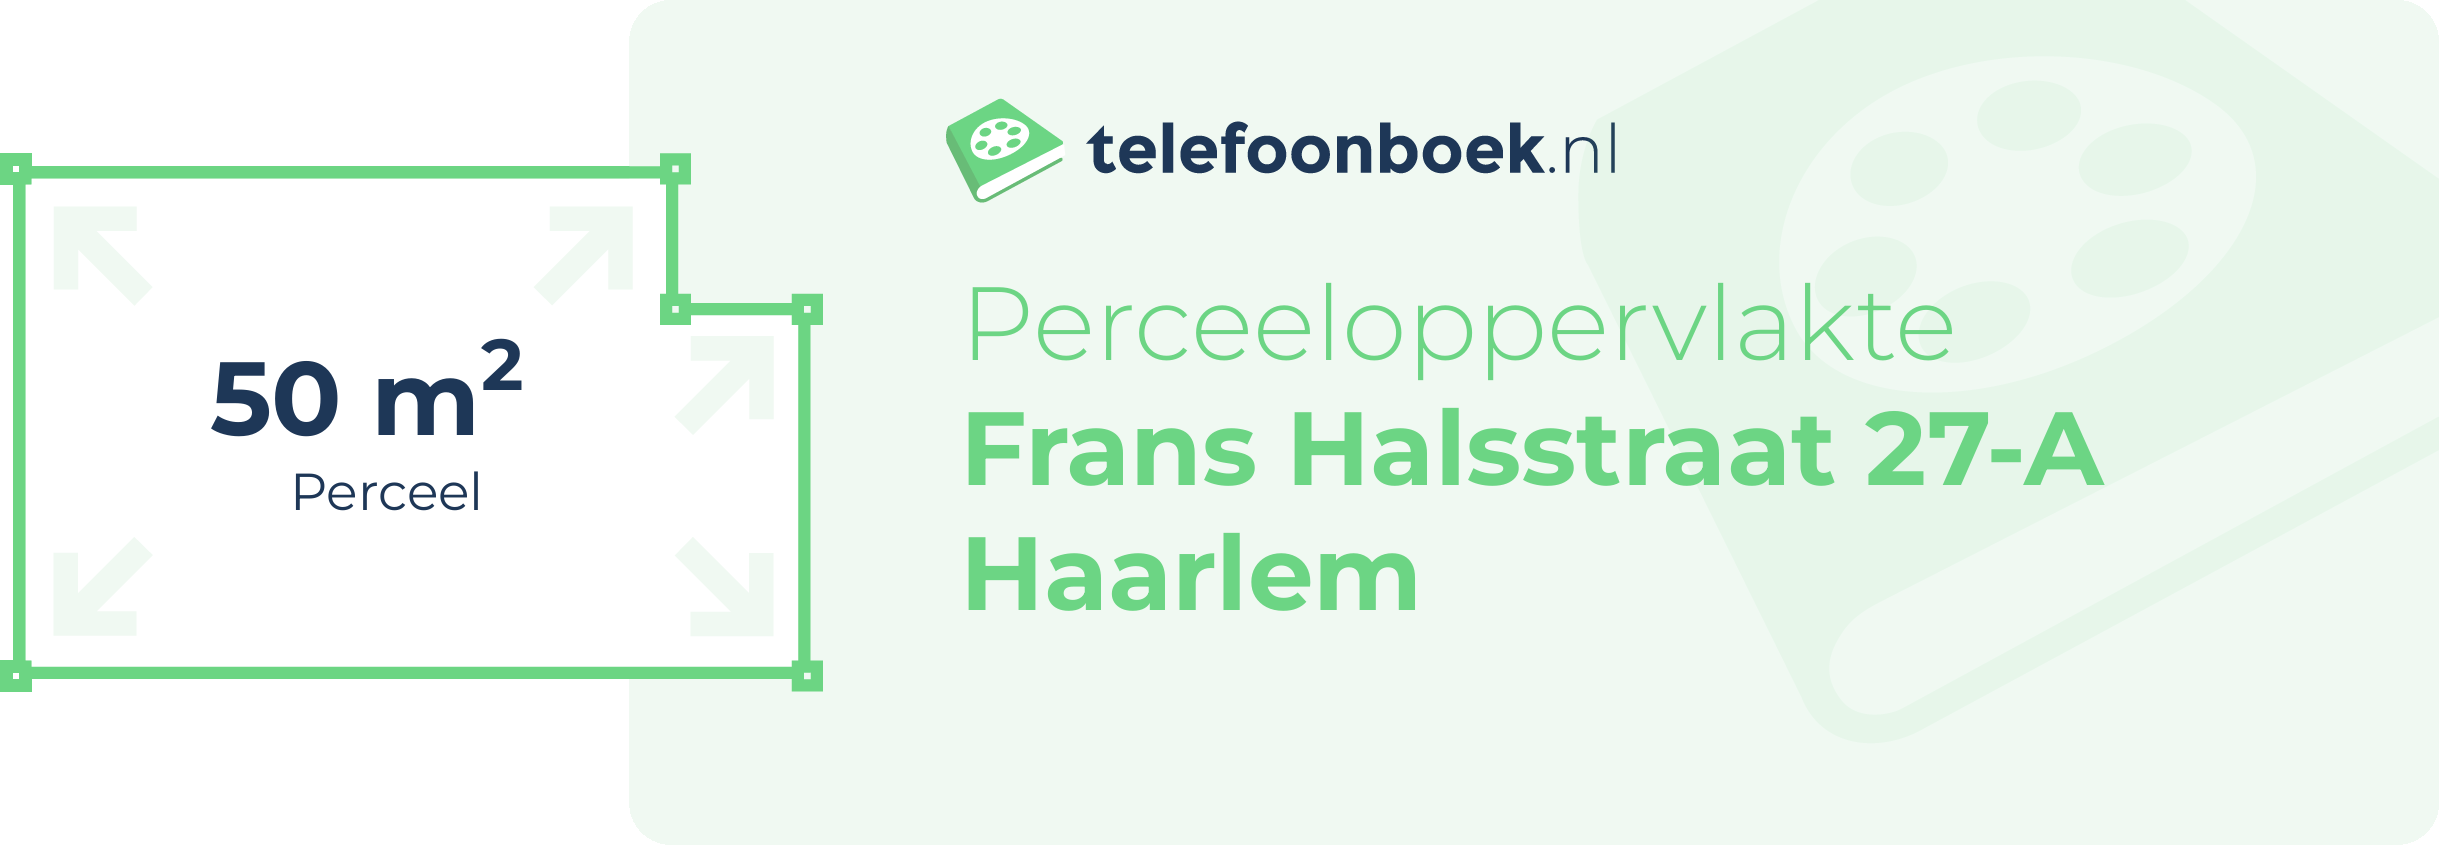 Perceeloppervlakte Frans Halsstraat 27-A Haarlem